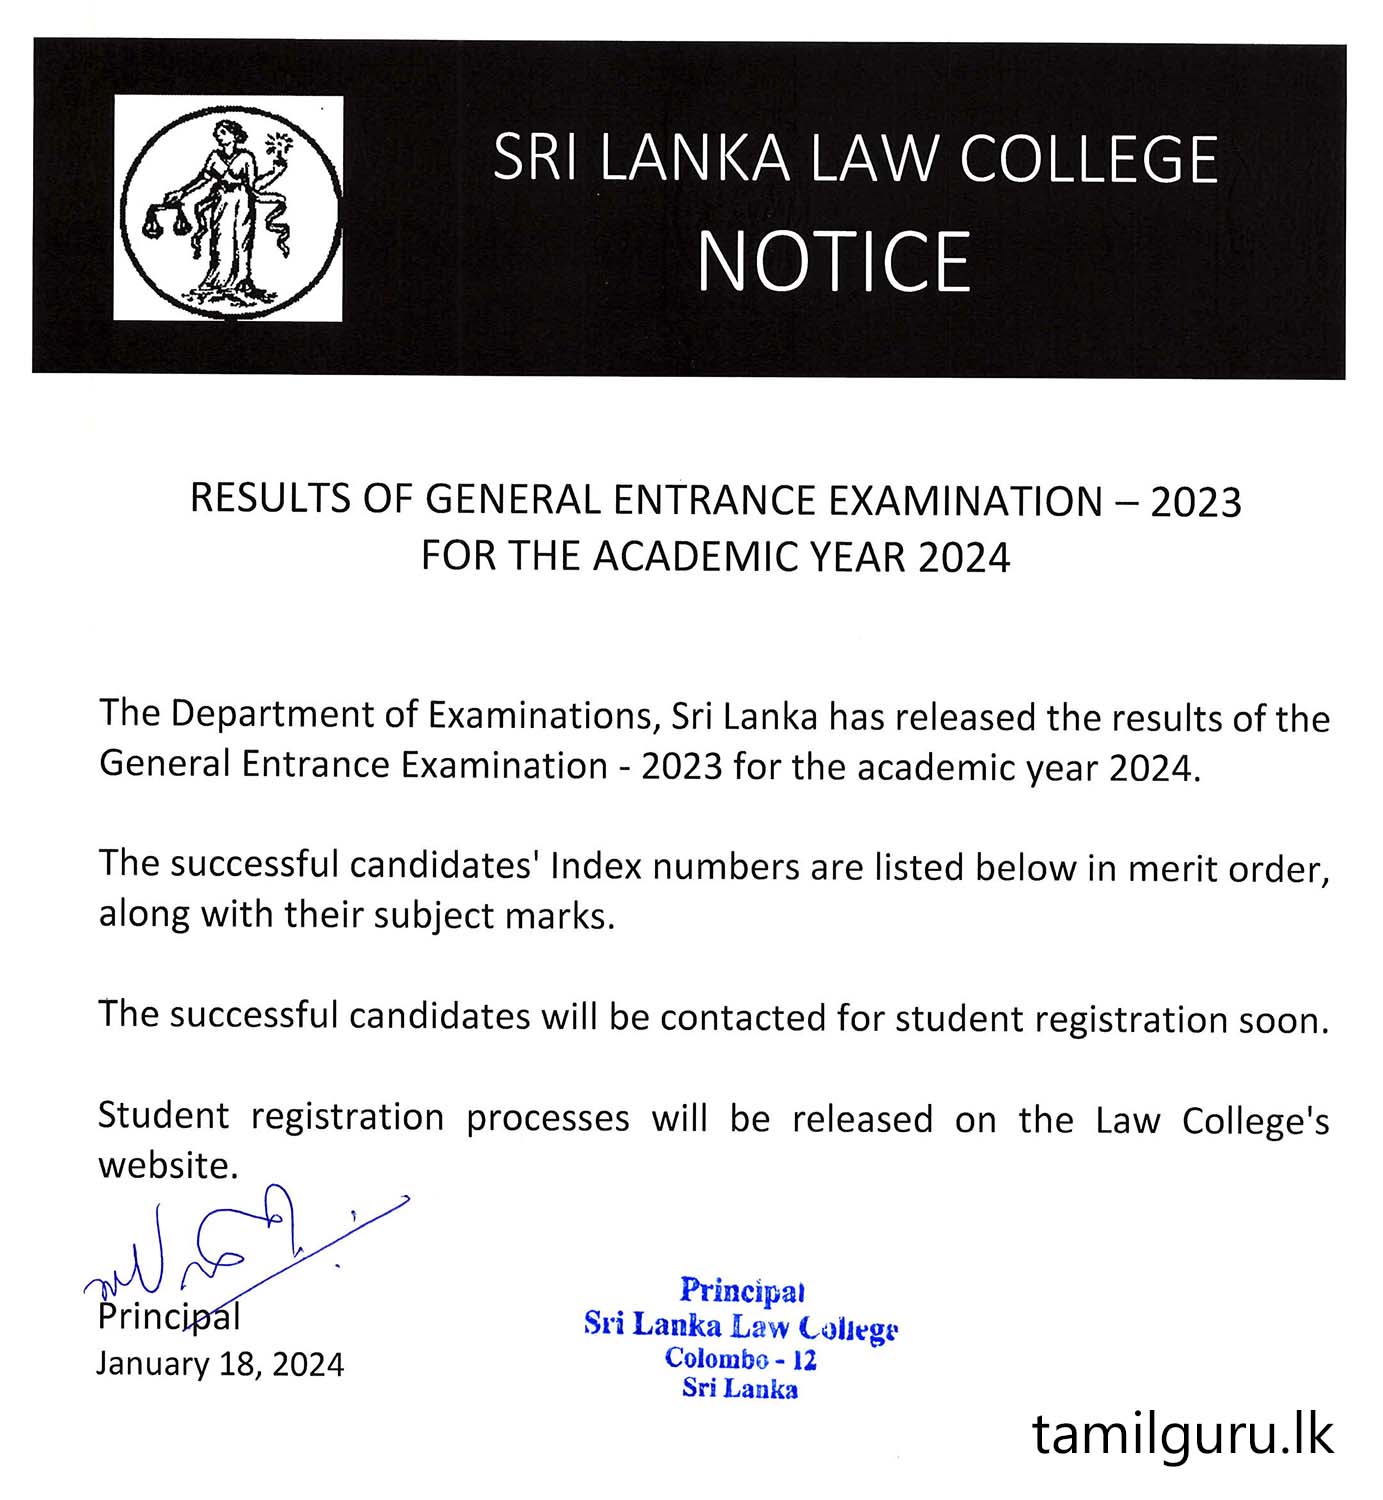 Sri Lanka Law College (SLLC) Entrance Exam Results 2023 (2024) - Released